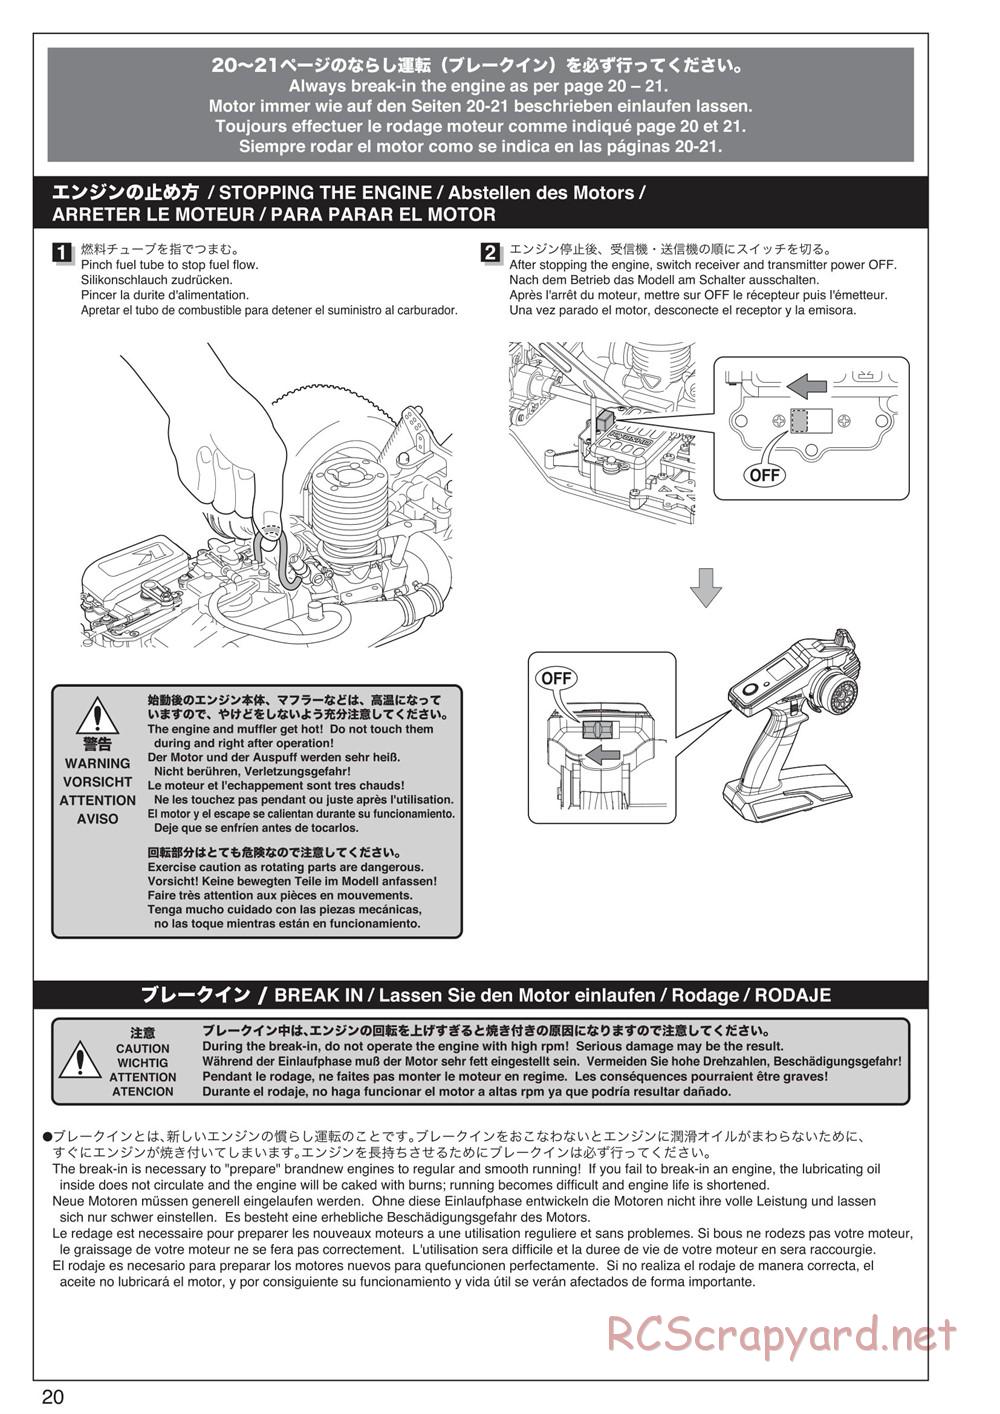 Kyosho - Inferno NEO ST Race Spec - Manual - Page 20